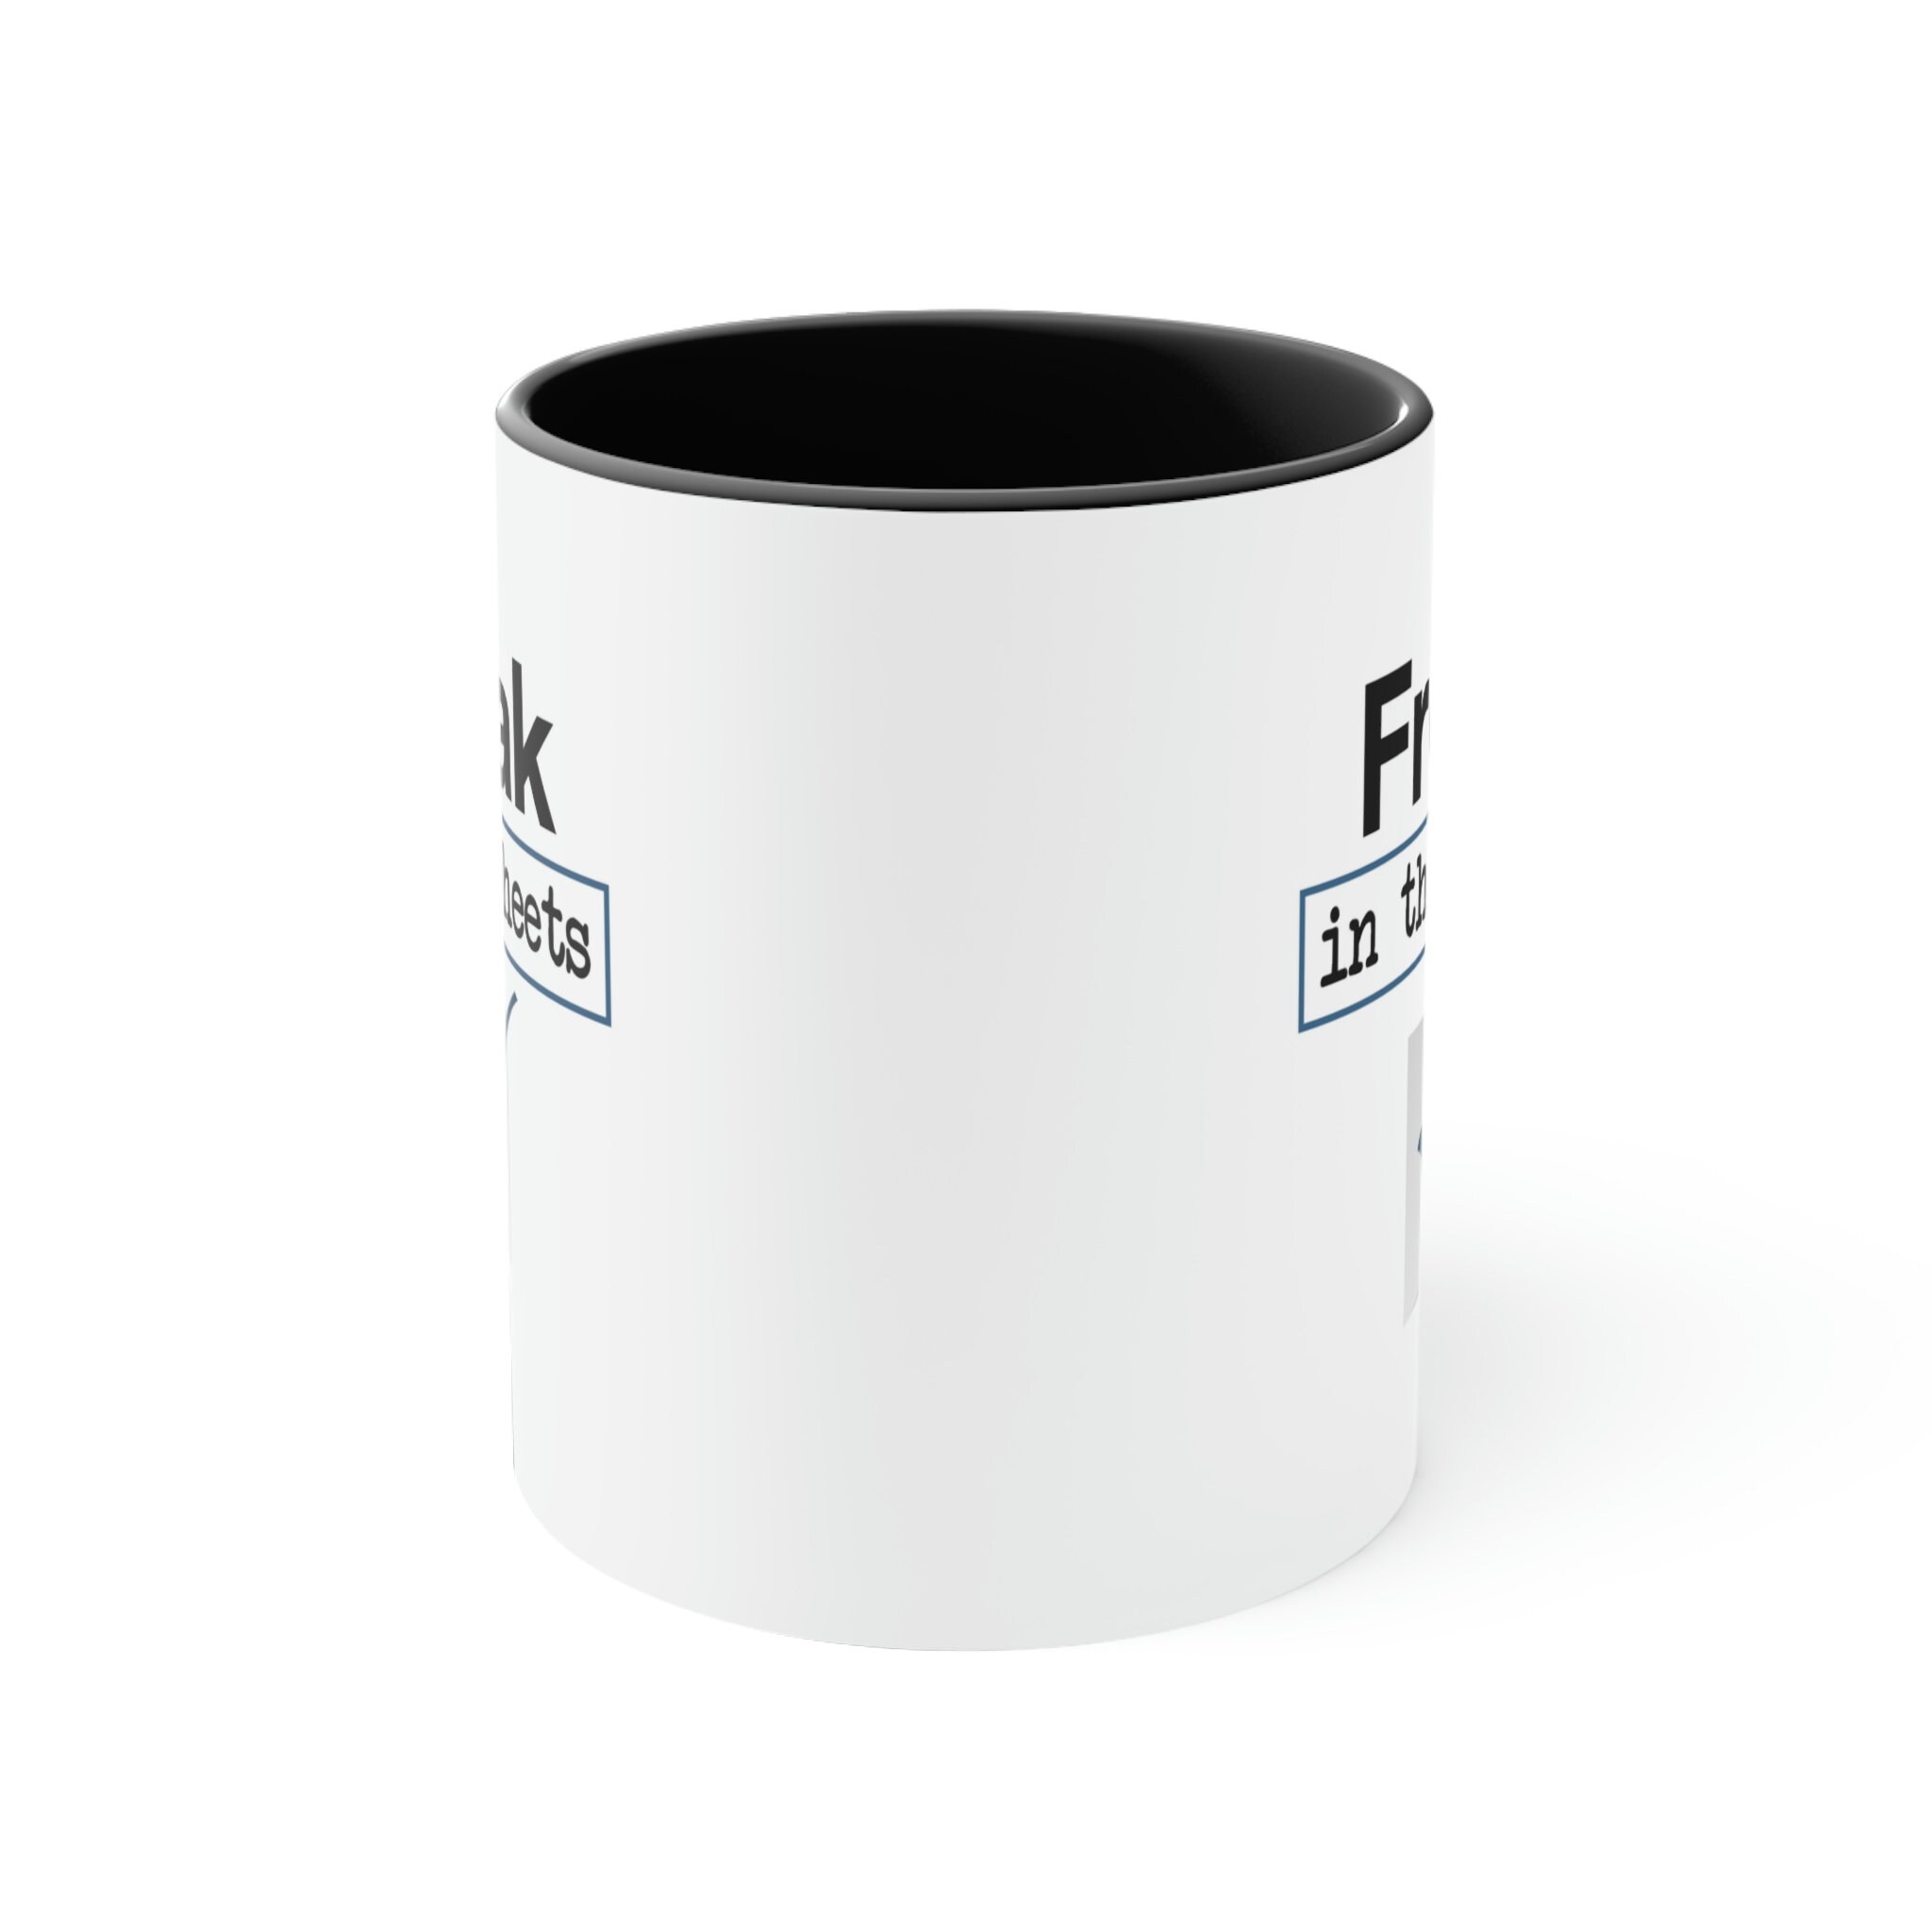 Blank Excel Sheet Coffee Mug for Sale by shminoa